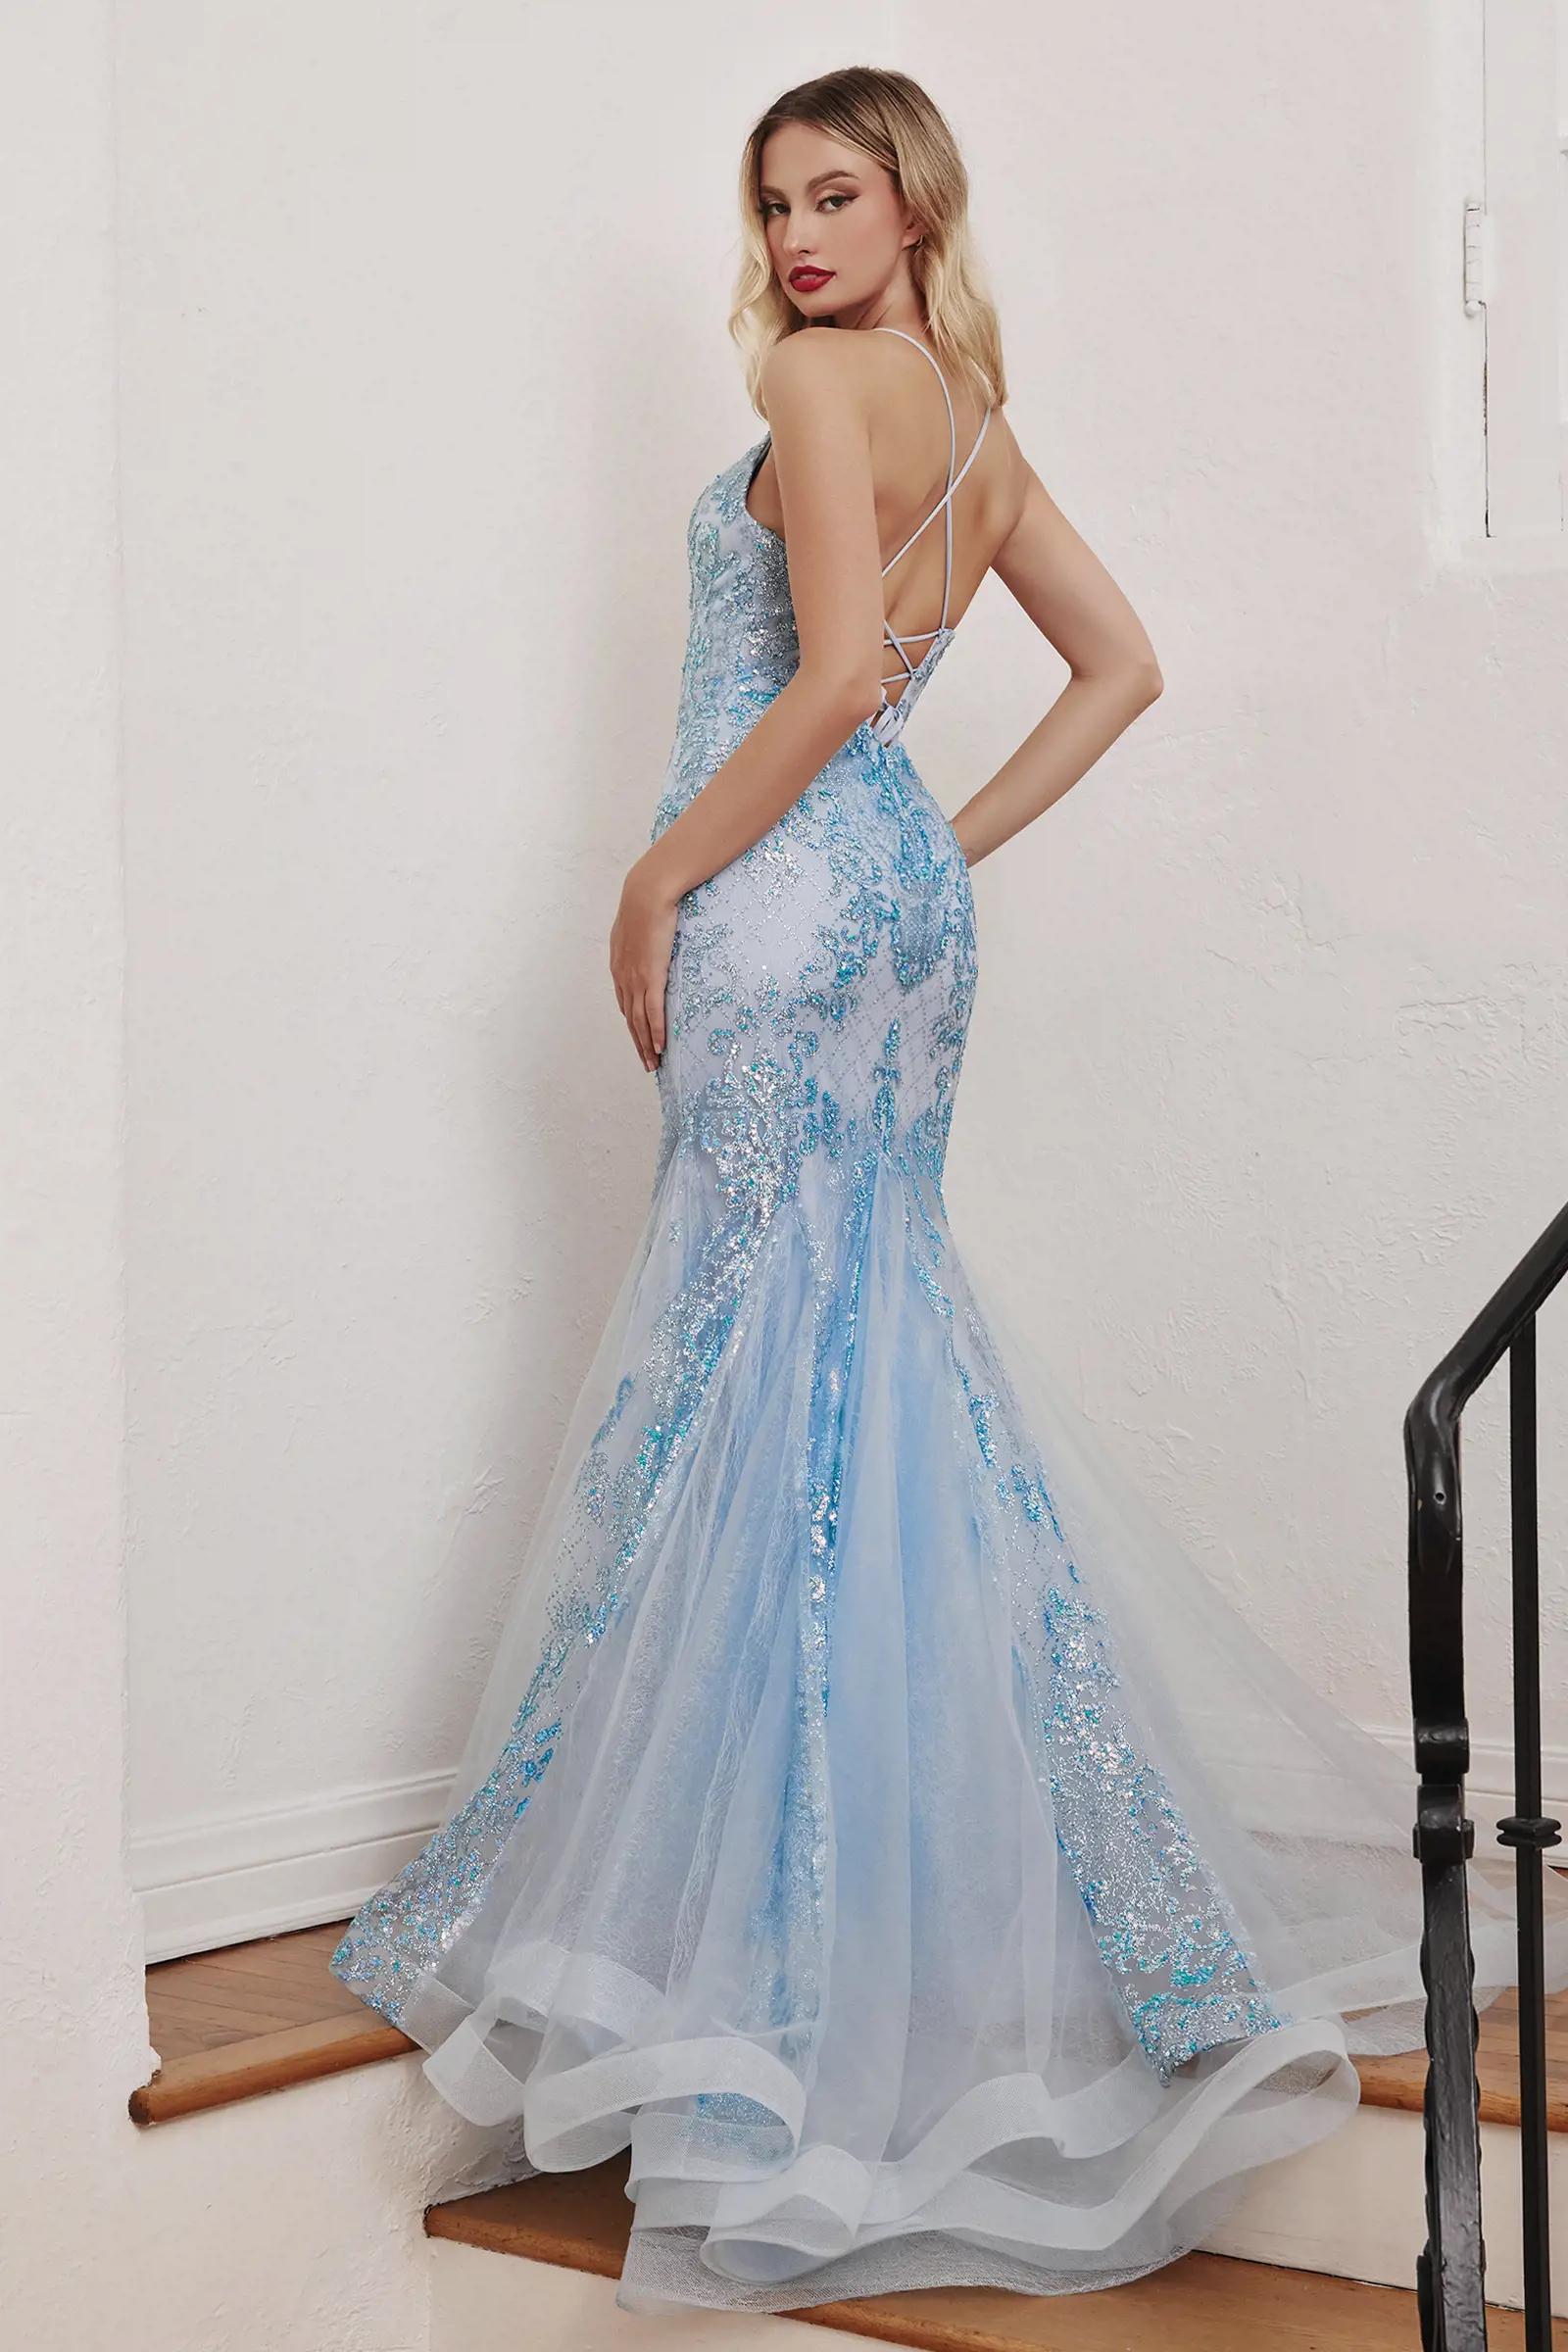 Model wearing a Mermaid gown